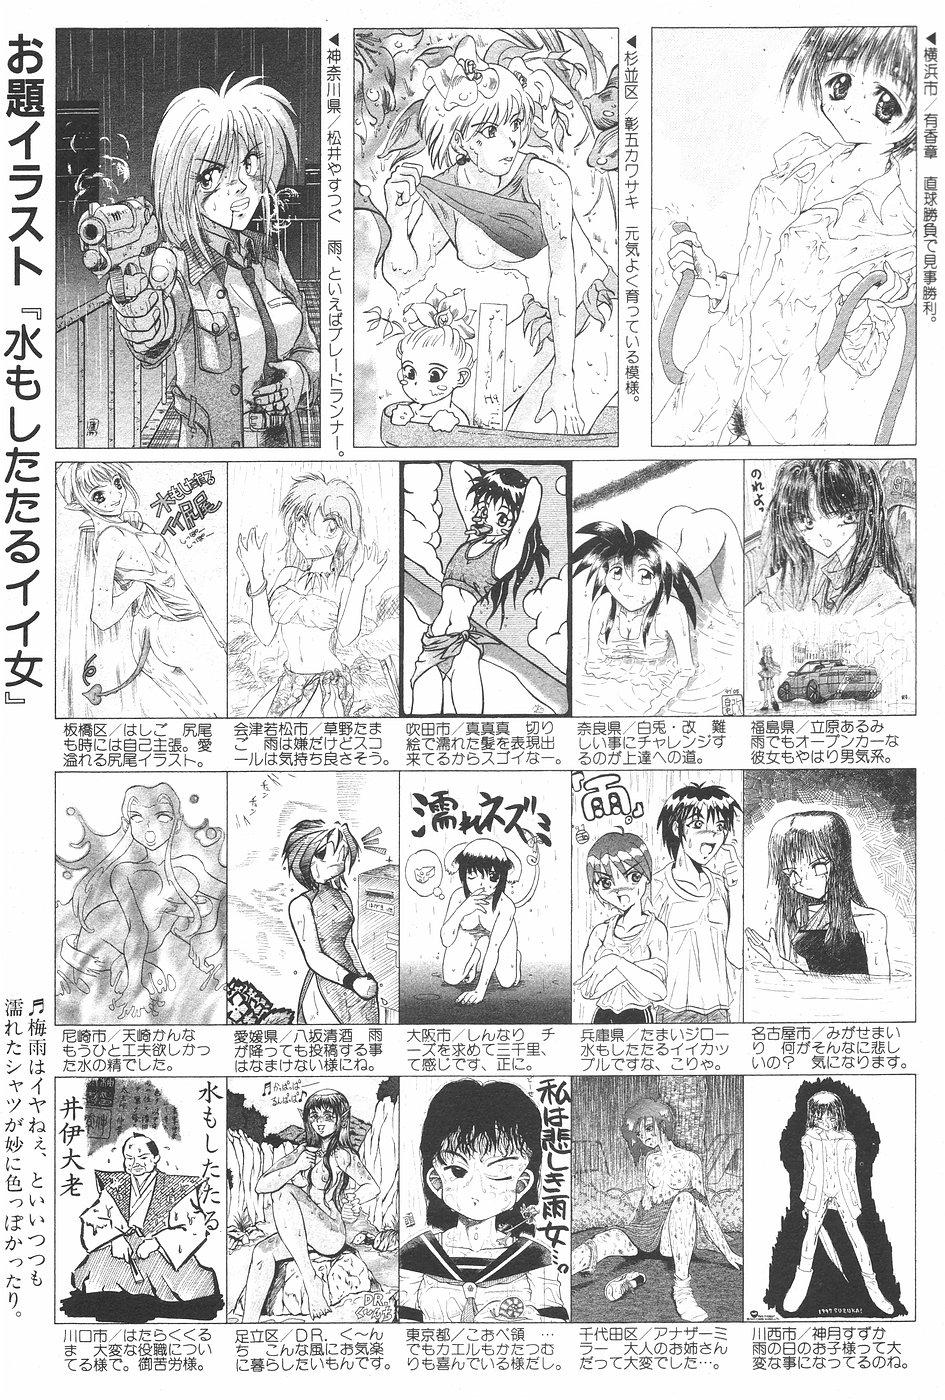 Manga Hotmilk 1997-07 176